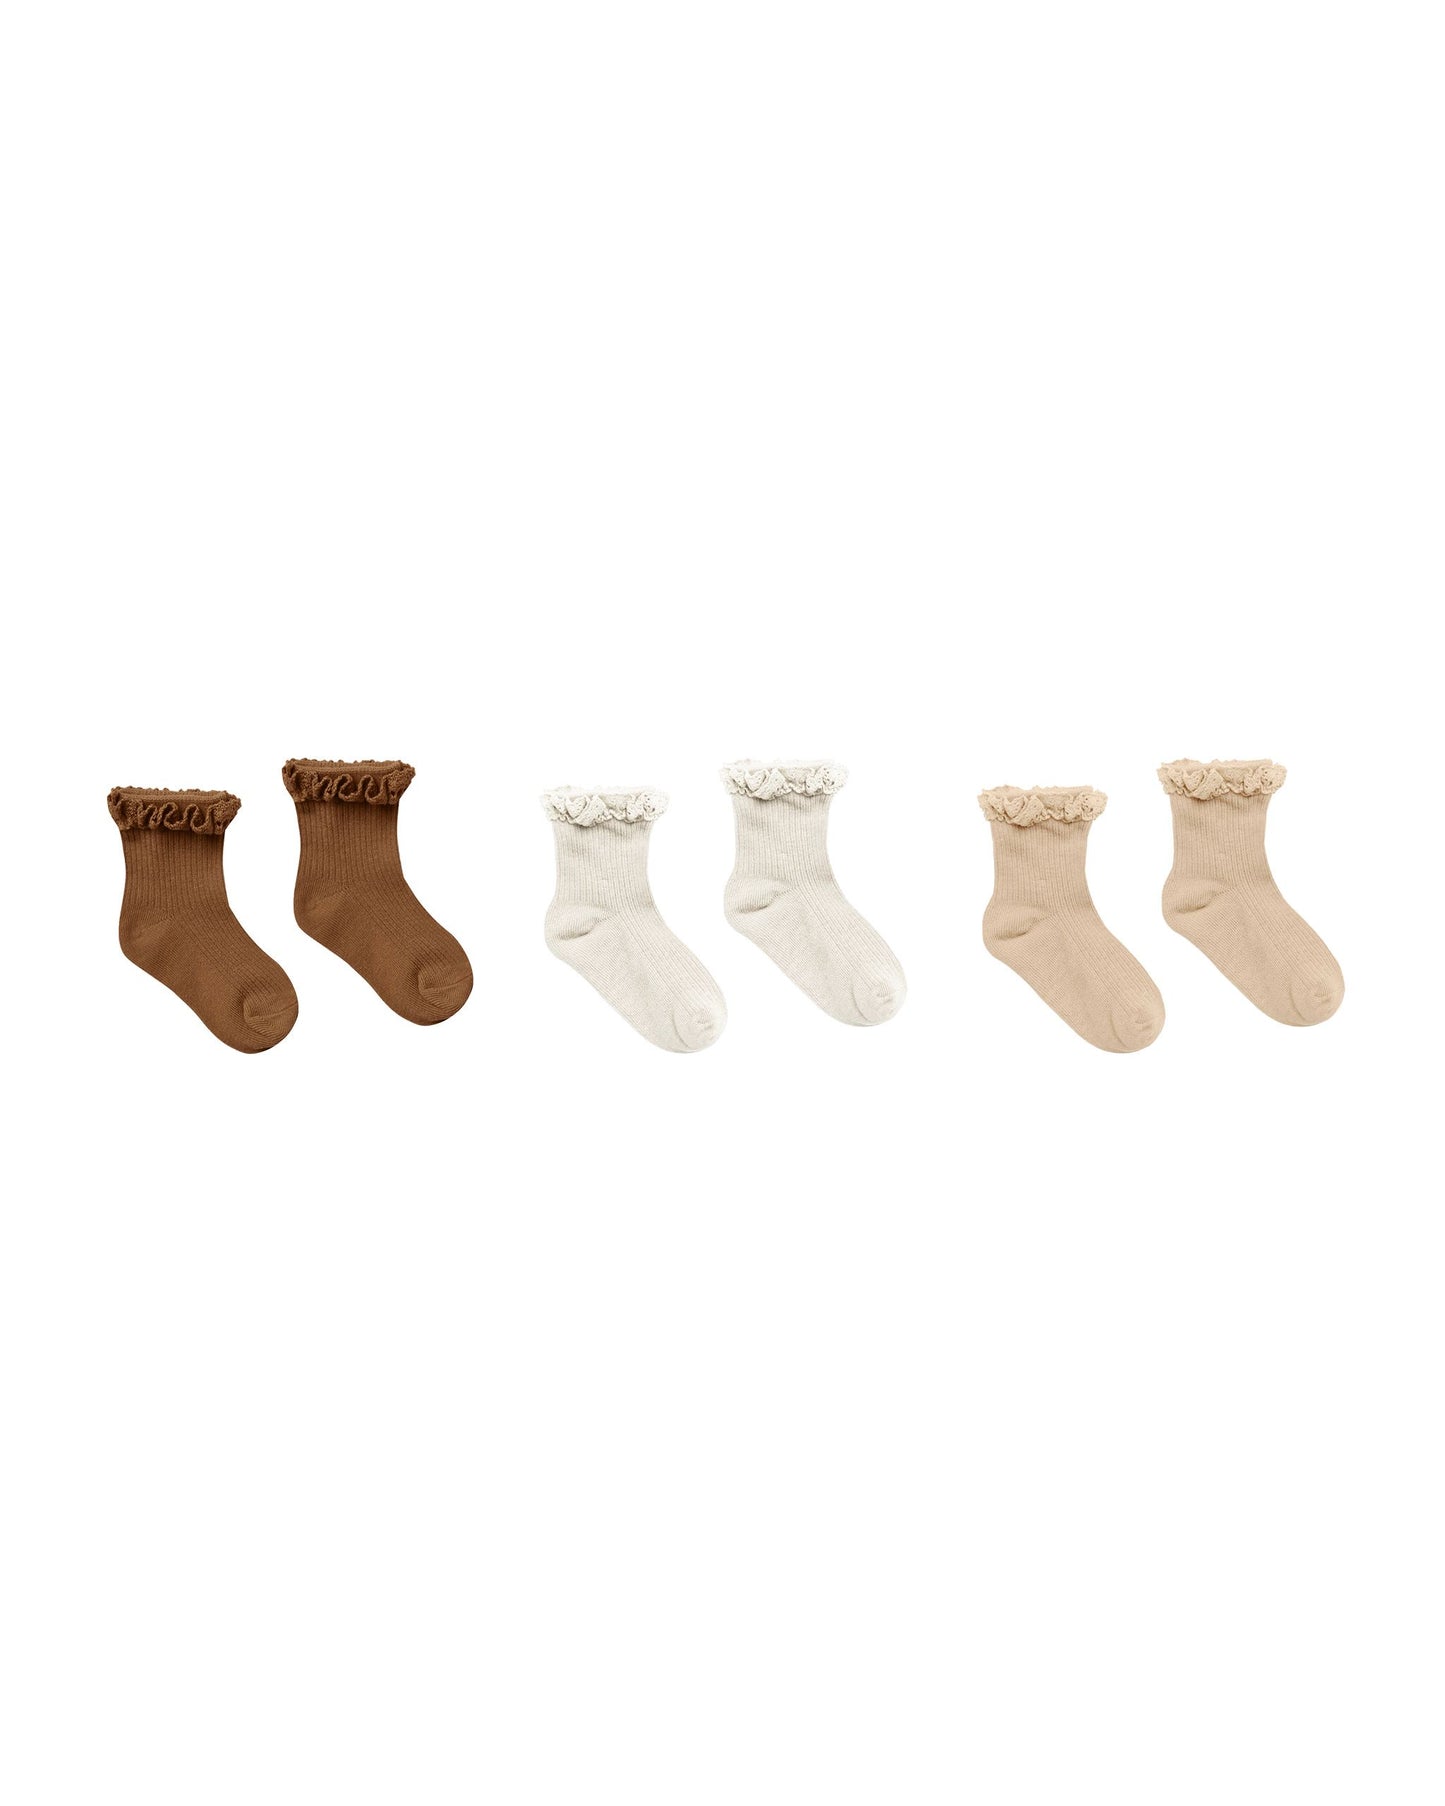 Ruffle Socks | Chocolate, Natural, Shell